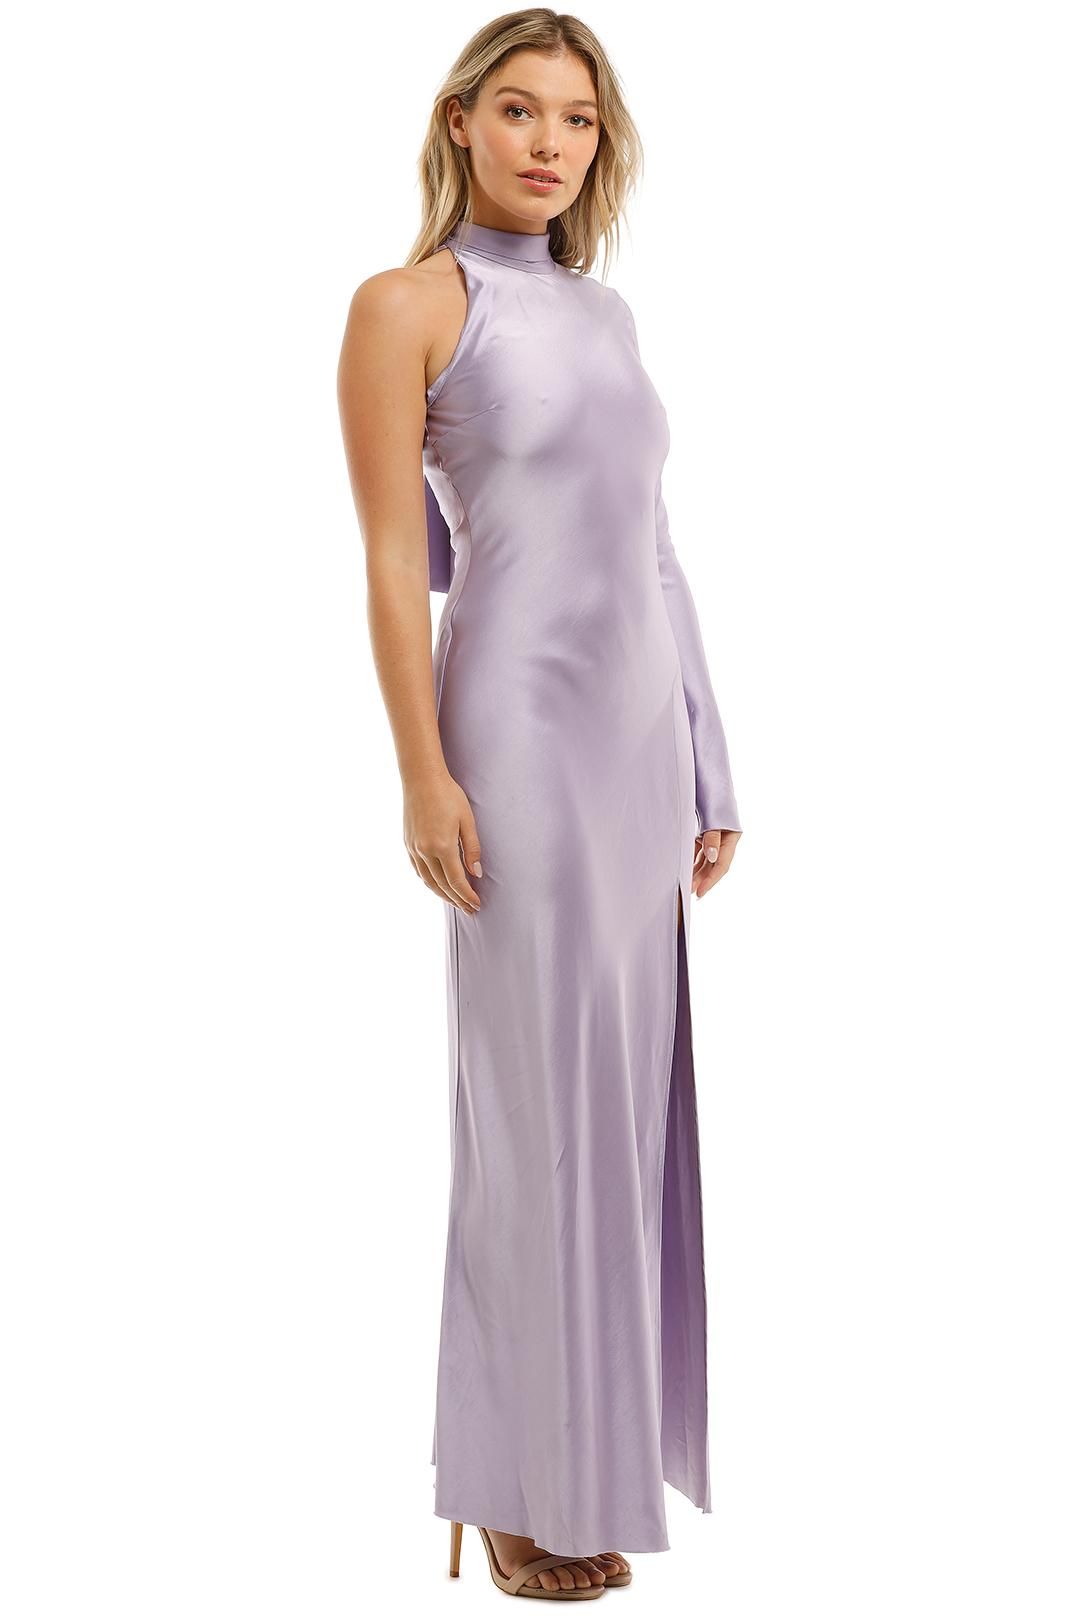 Bec and Bridge Violetta Maxi Dress Lilac One Sleeve High Neck